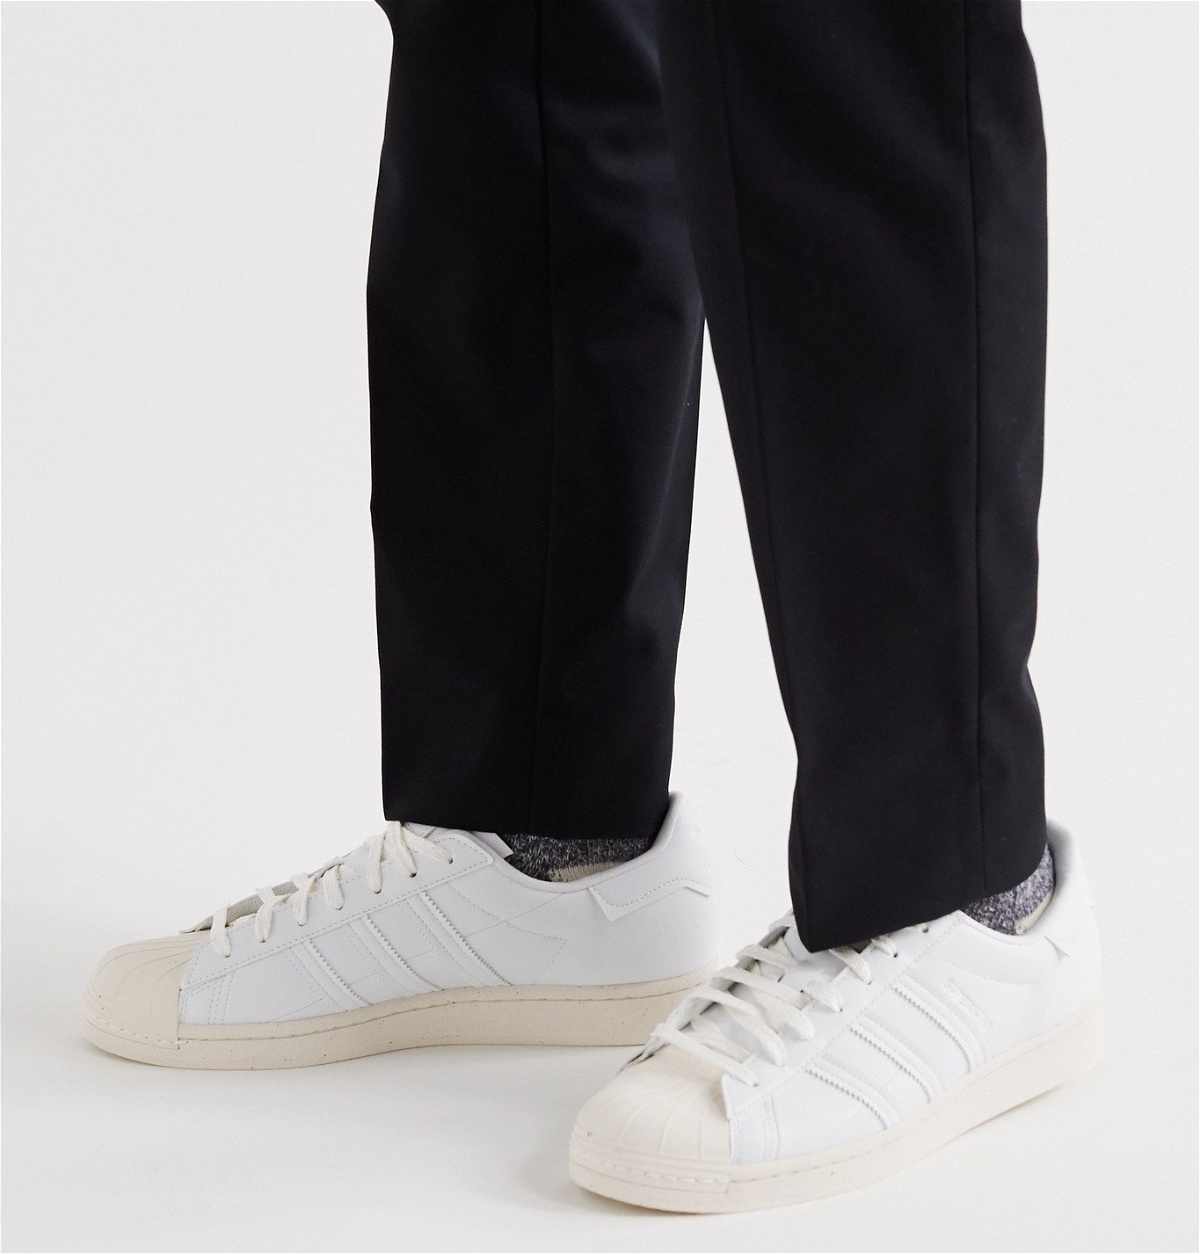 by - Alexander Originals Leather Sneakers White Vegan Wang adidas Clean Classics - Originals Superstar adidas